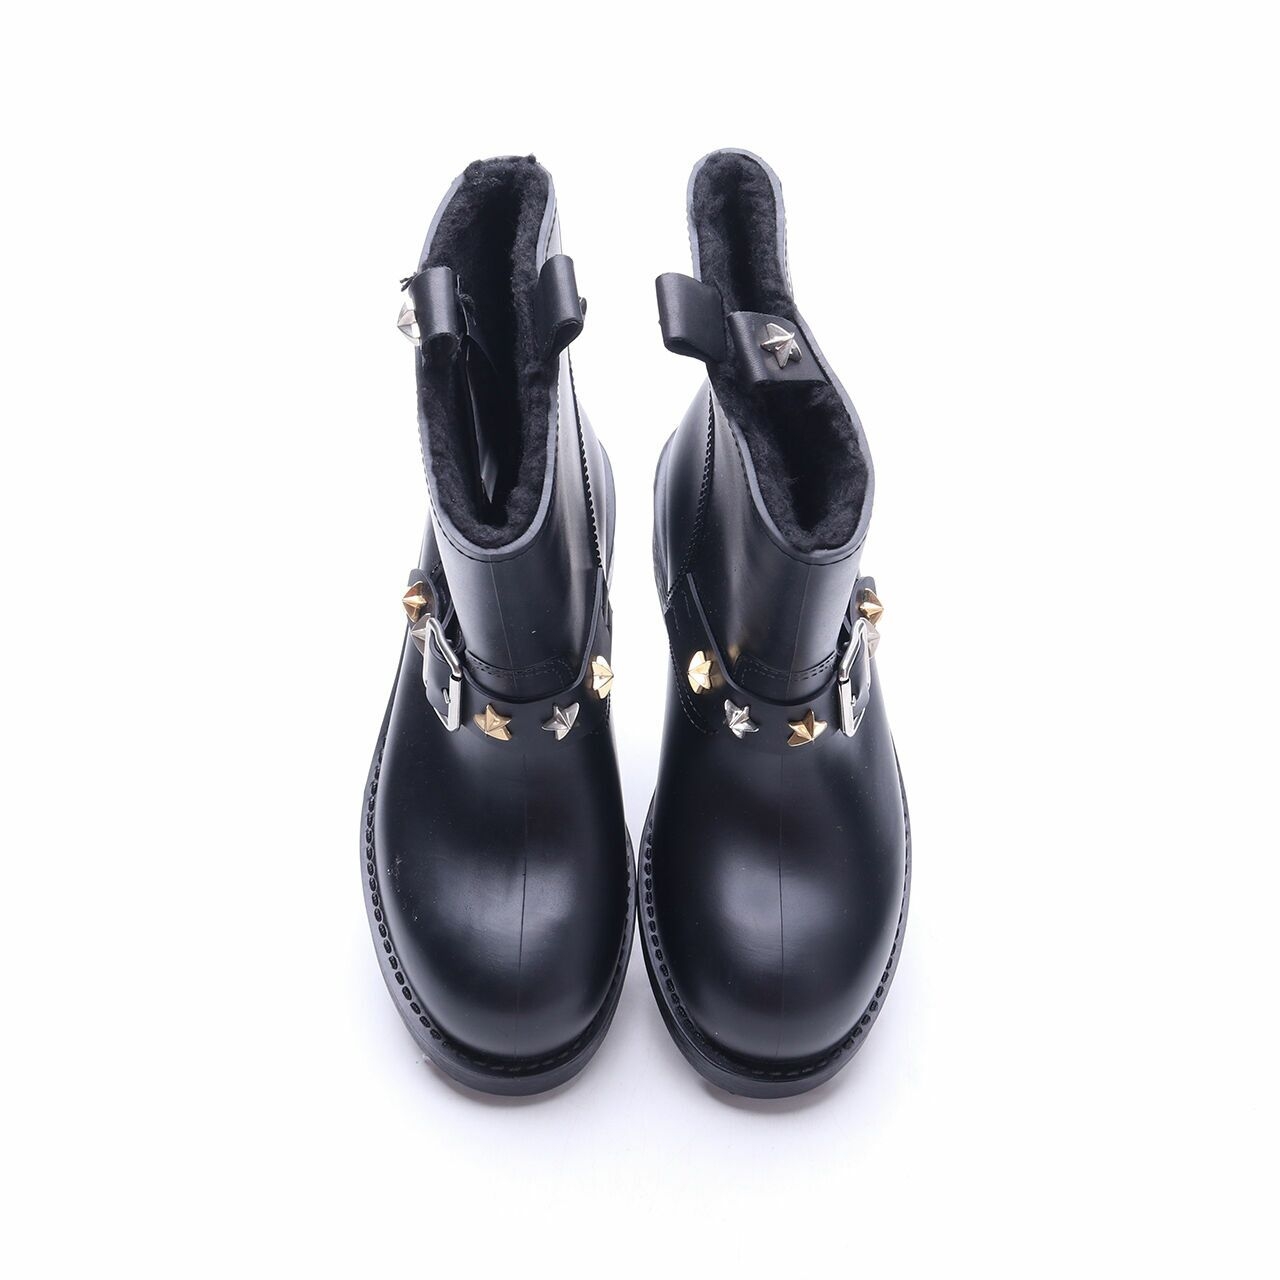 Just Cavalli Gumboots Black Boots